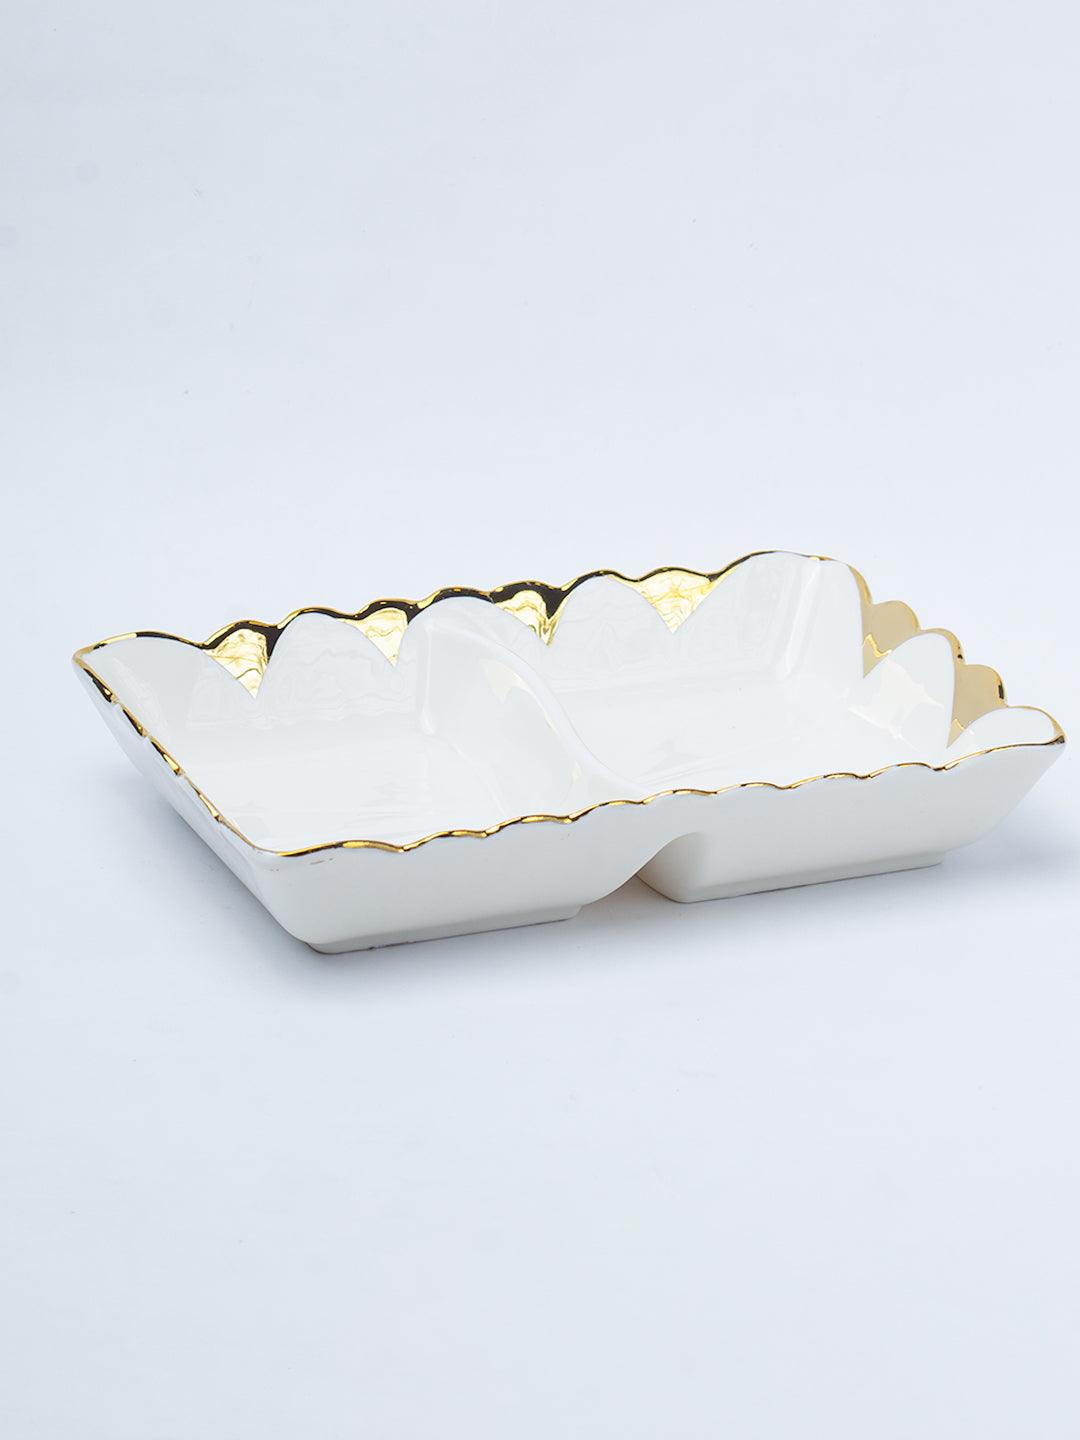 Antique Off White Ceramic Divided Serving Dish - 21 x 14 x 6CM - 2